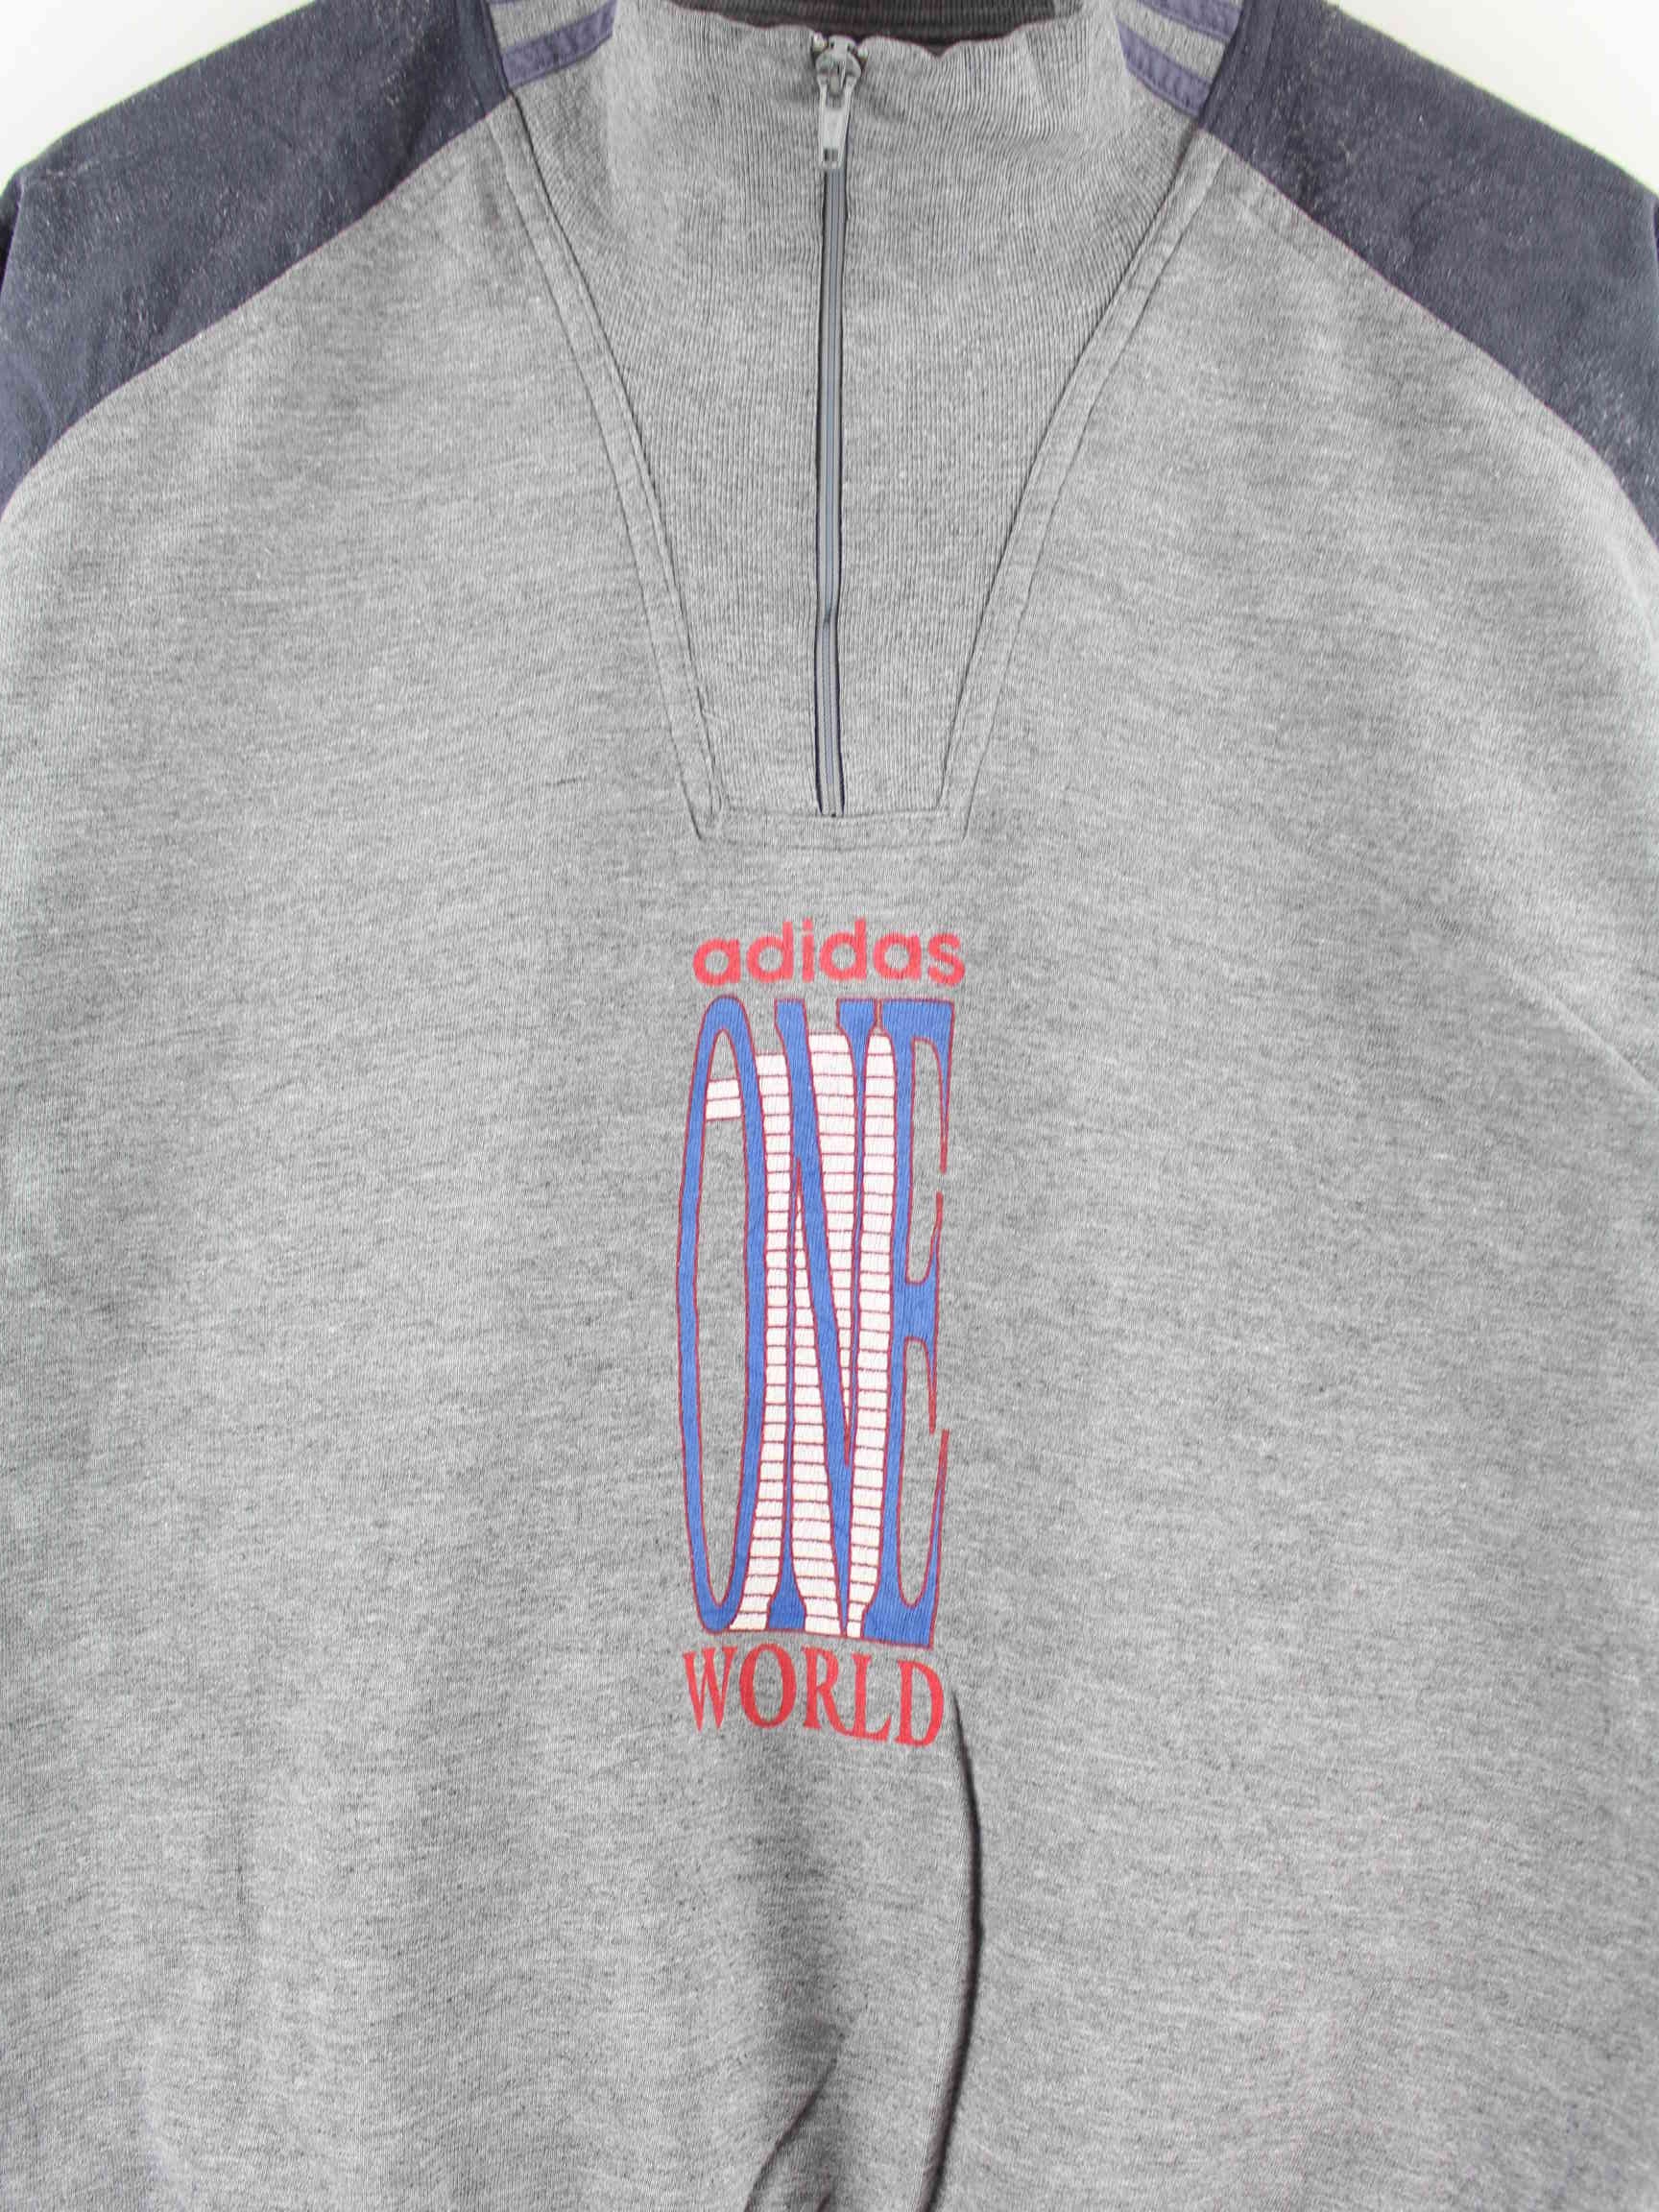 Adidas 80s Vintage One World Print Half Zip Sweater Grau M (detail image 1)